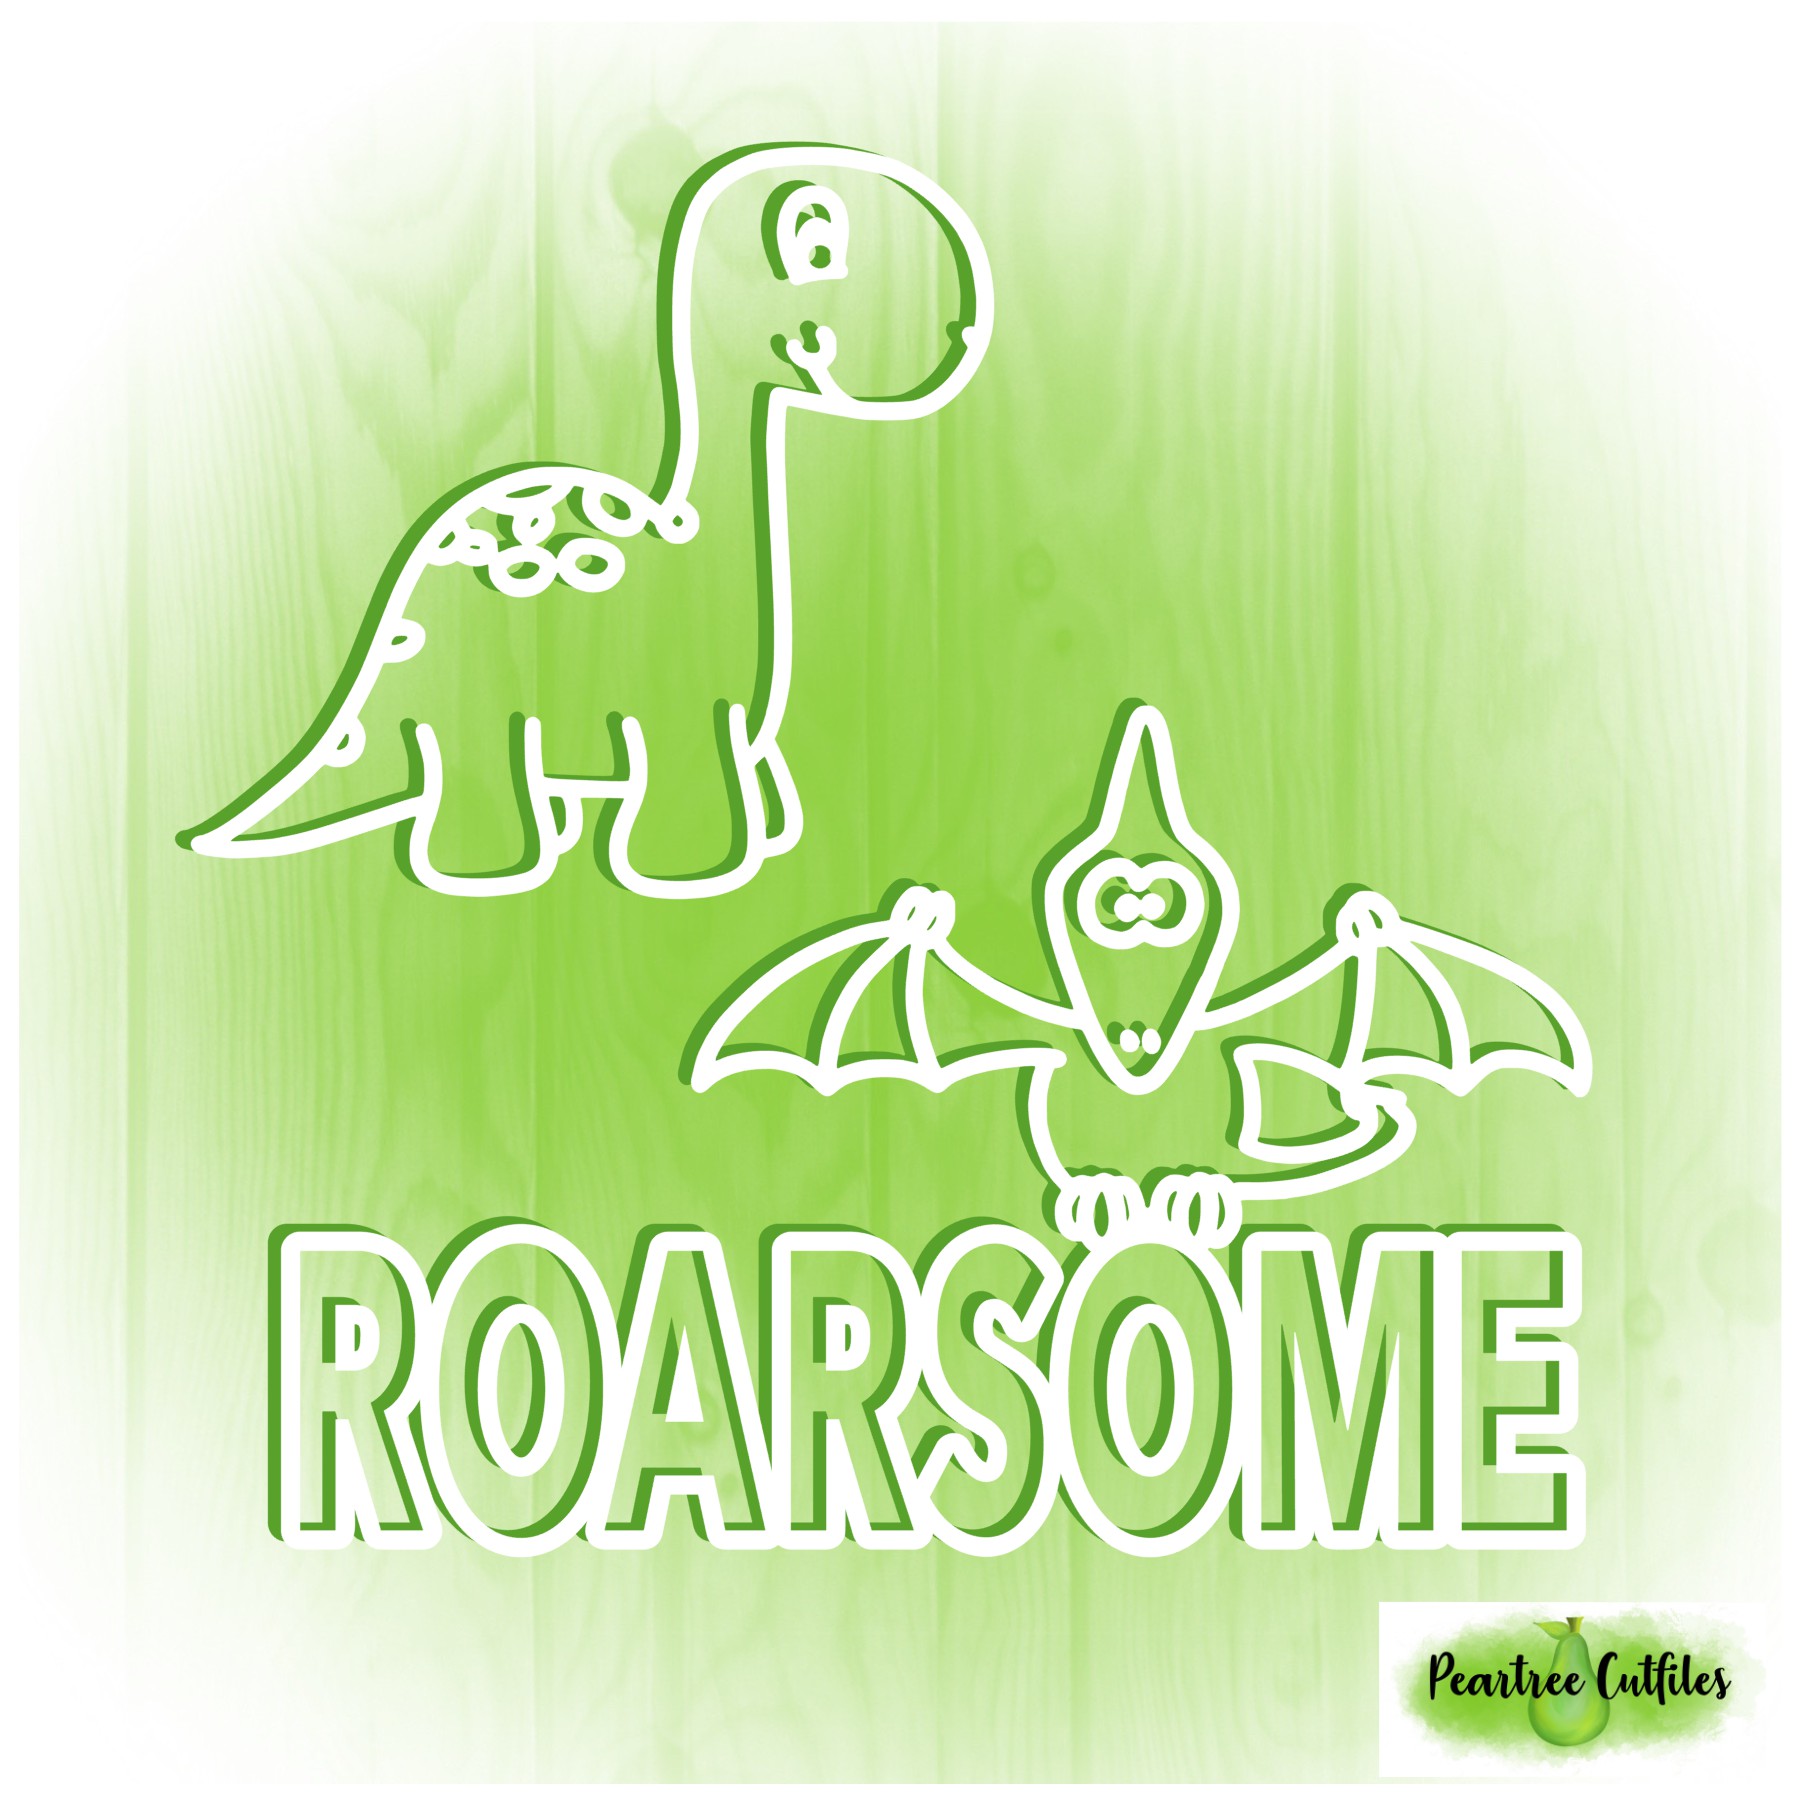 Roarsome – Peartree Cutfiles